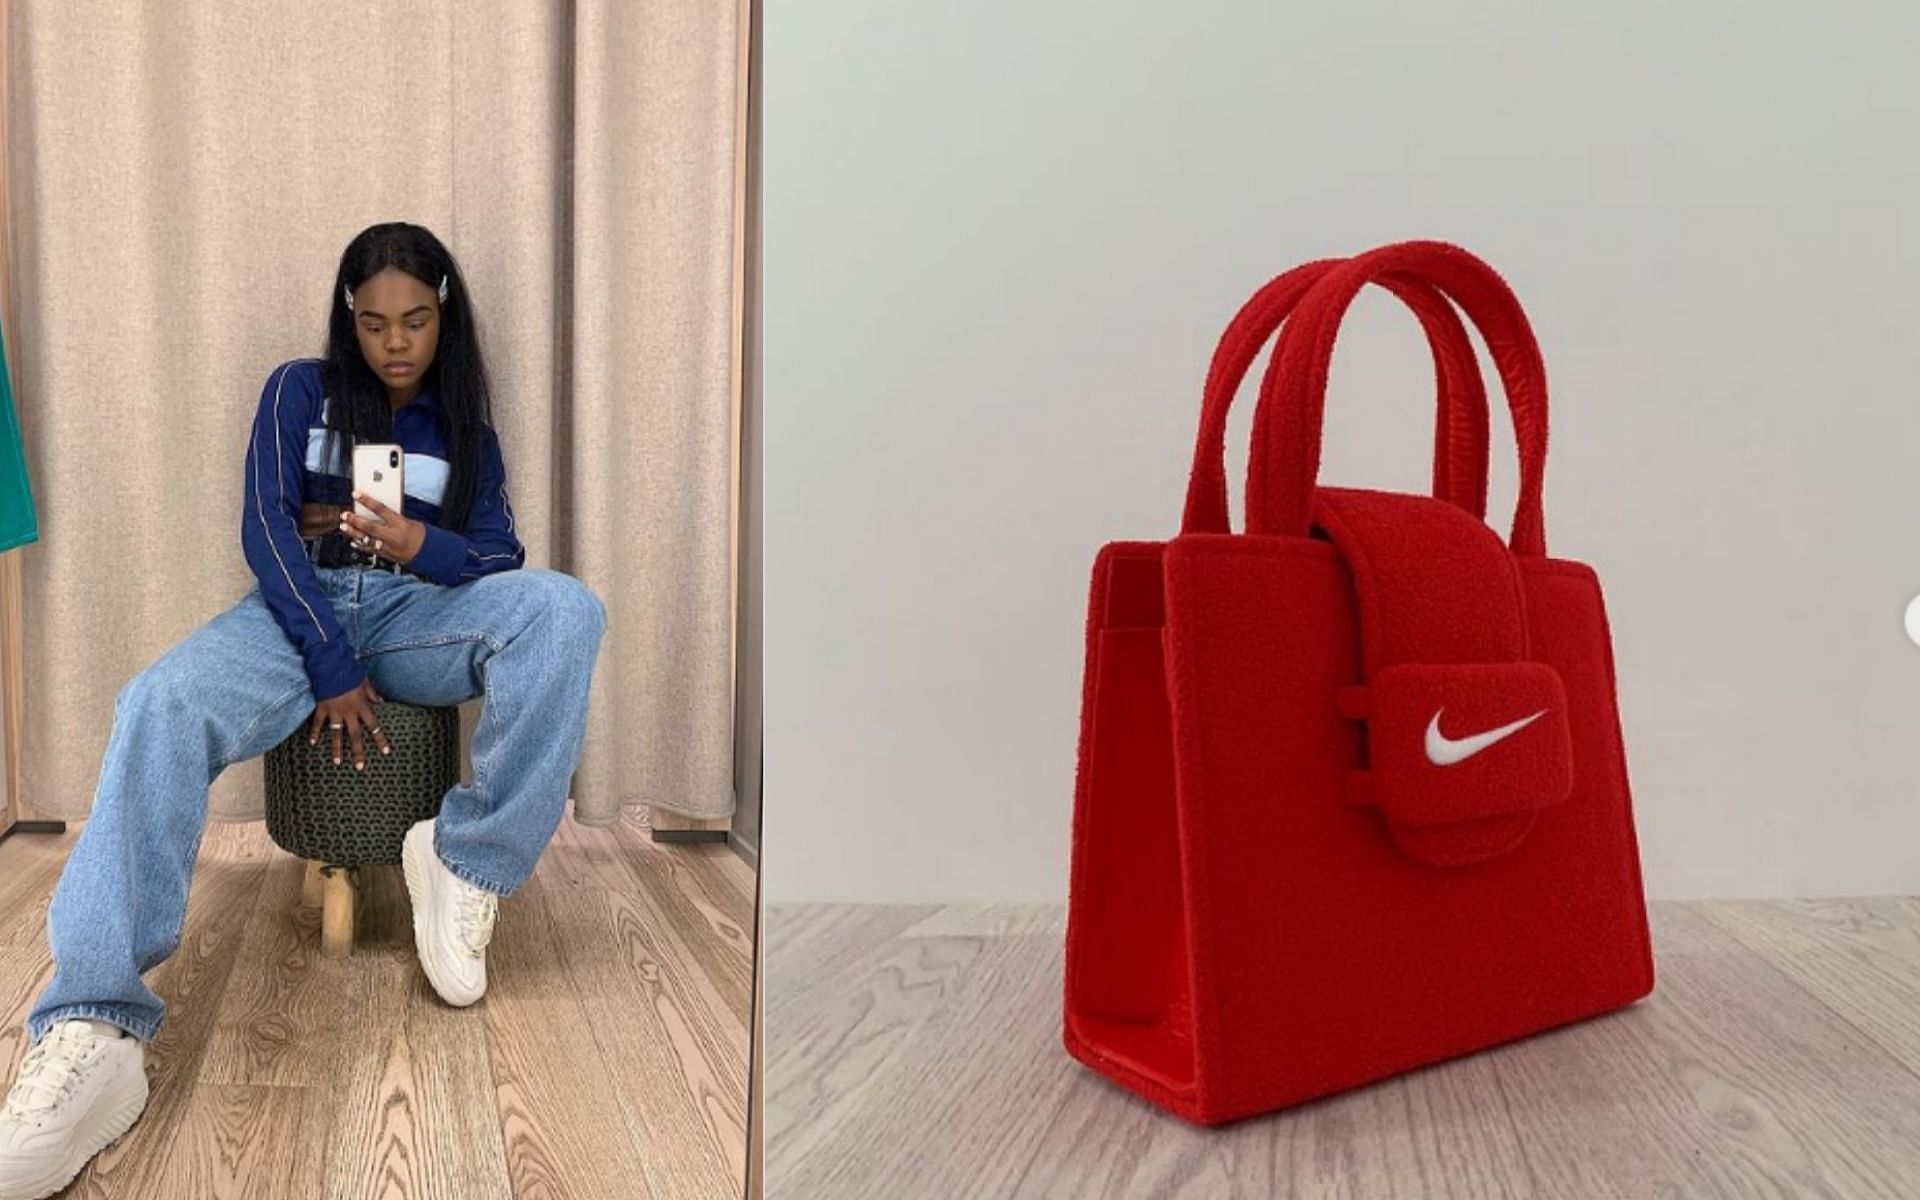 Upcycled Nike Bags by designer Tega Akinola (Image via tegaakinola/apocstore/Instagram)